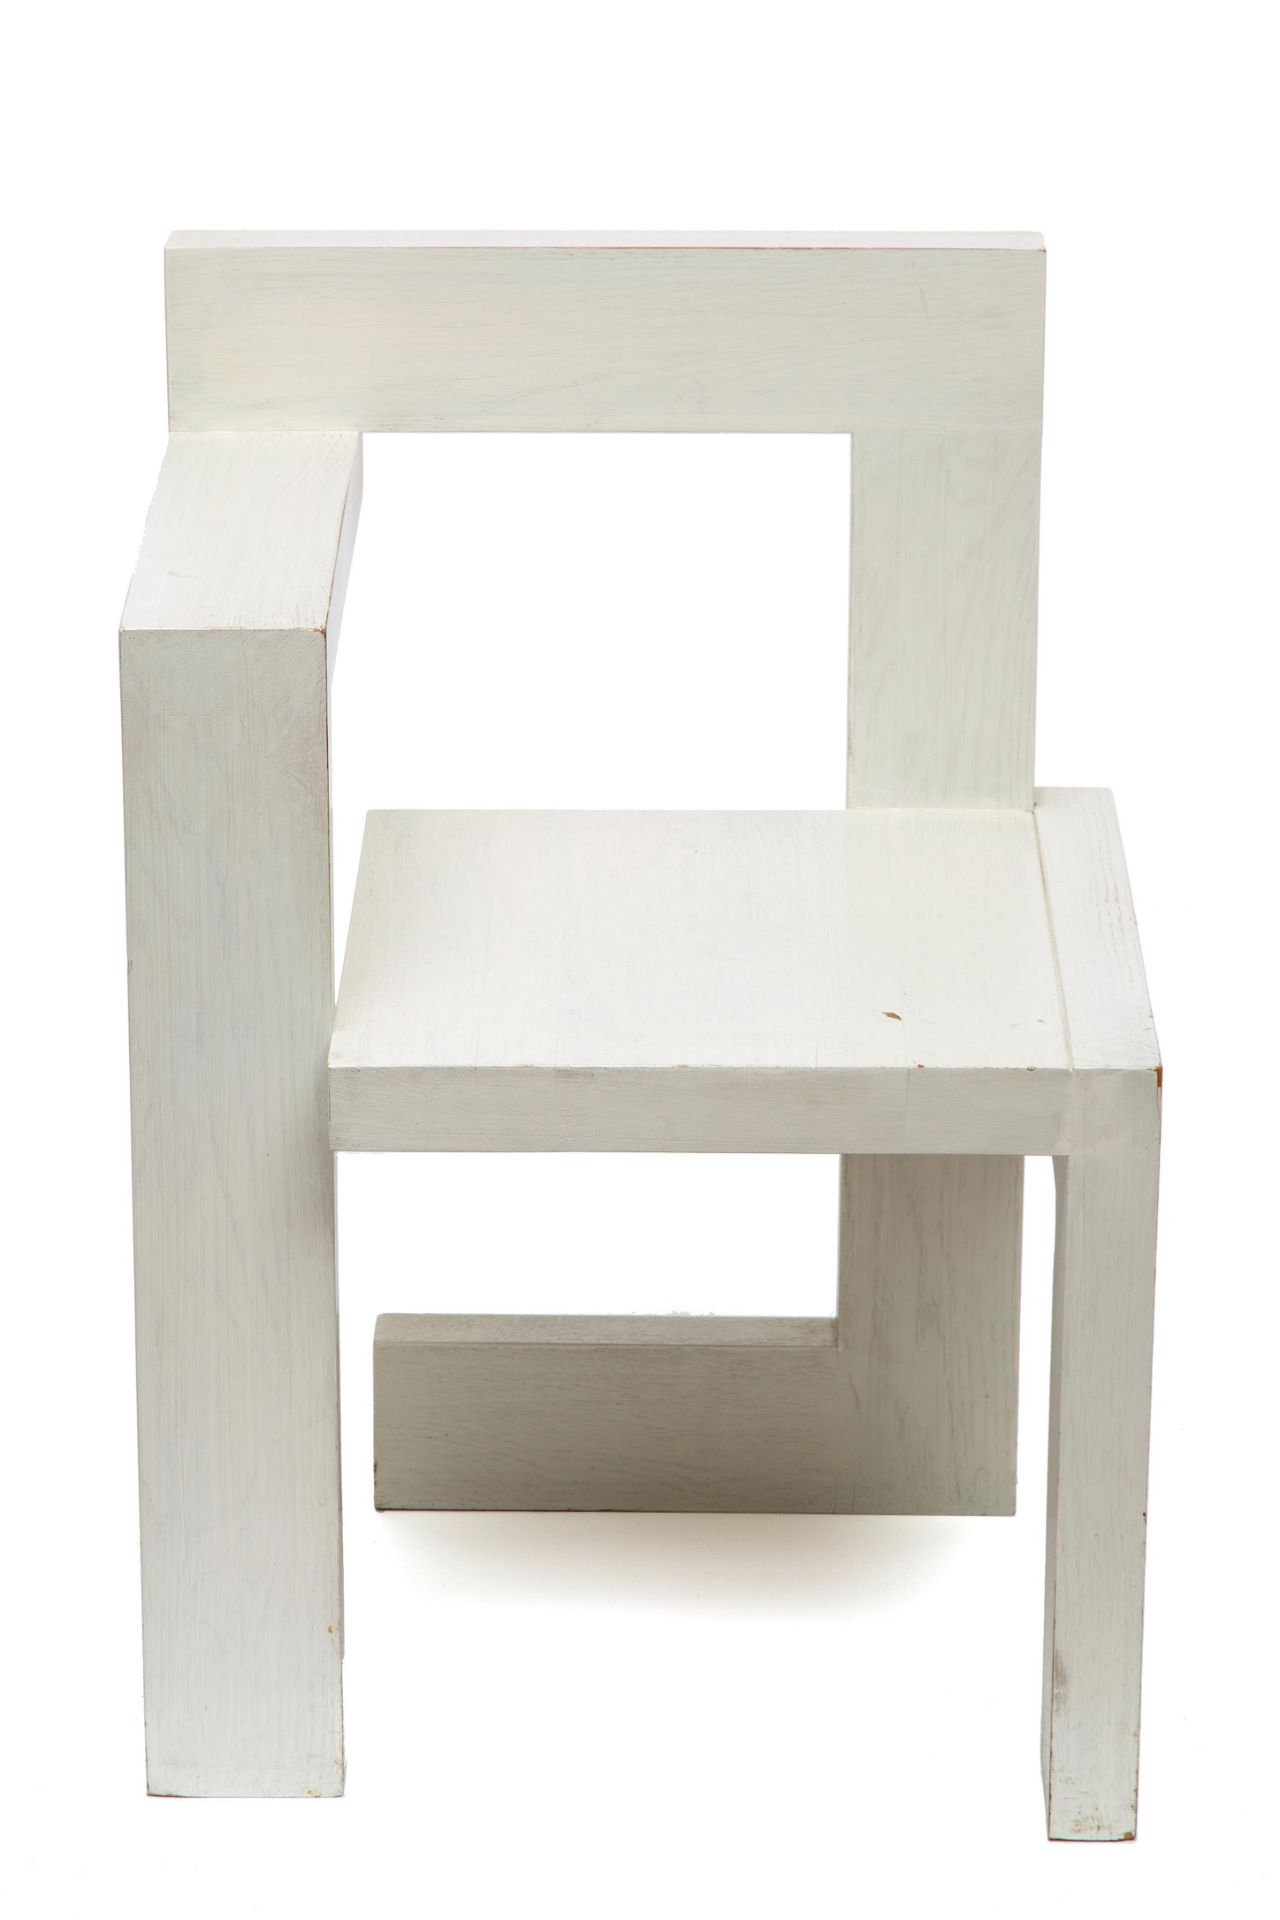 Gerrit Rietveld (1888-1964), Steltman stoel. - Image 3 of 6